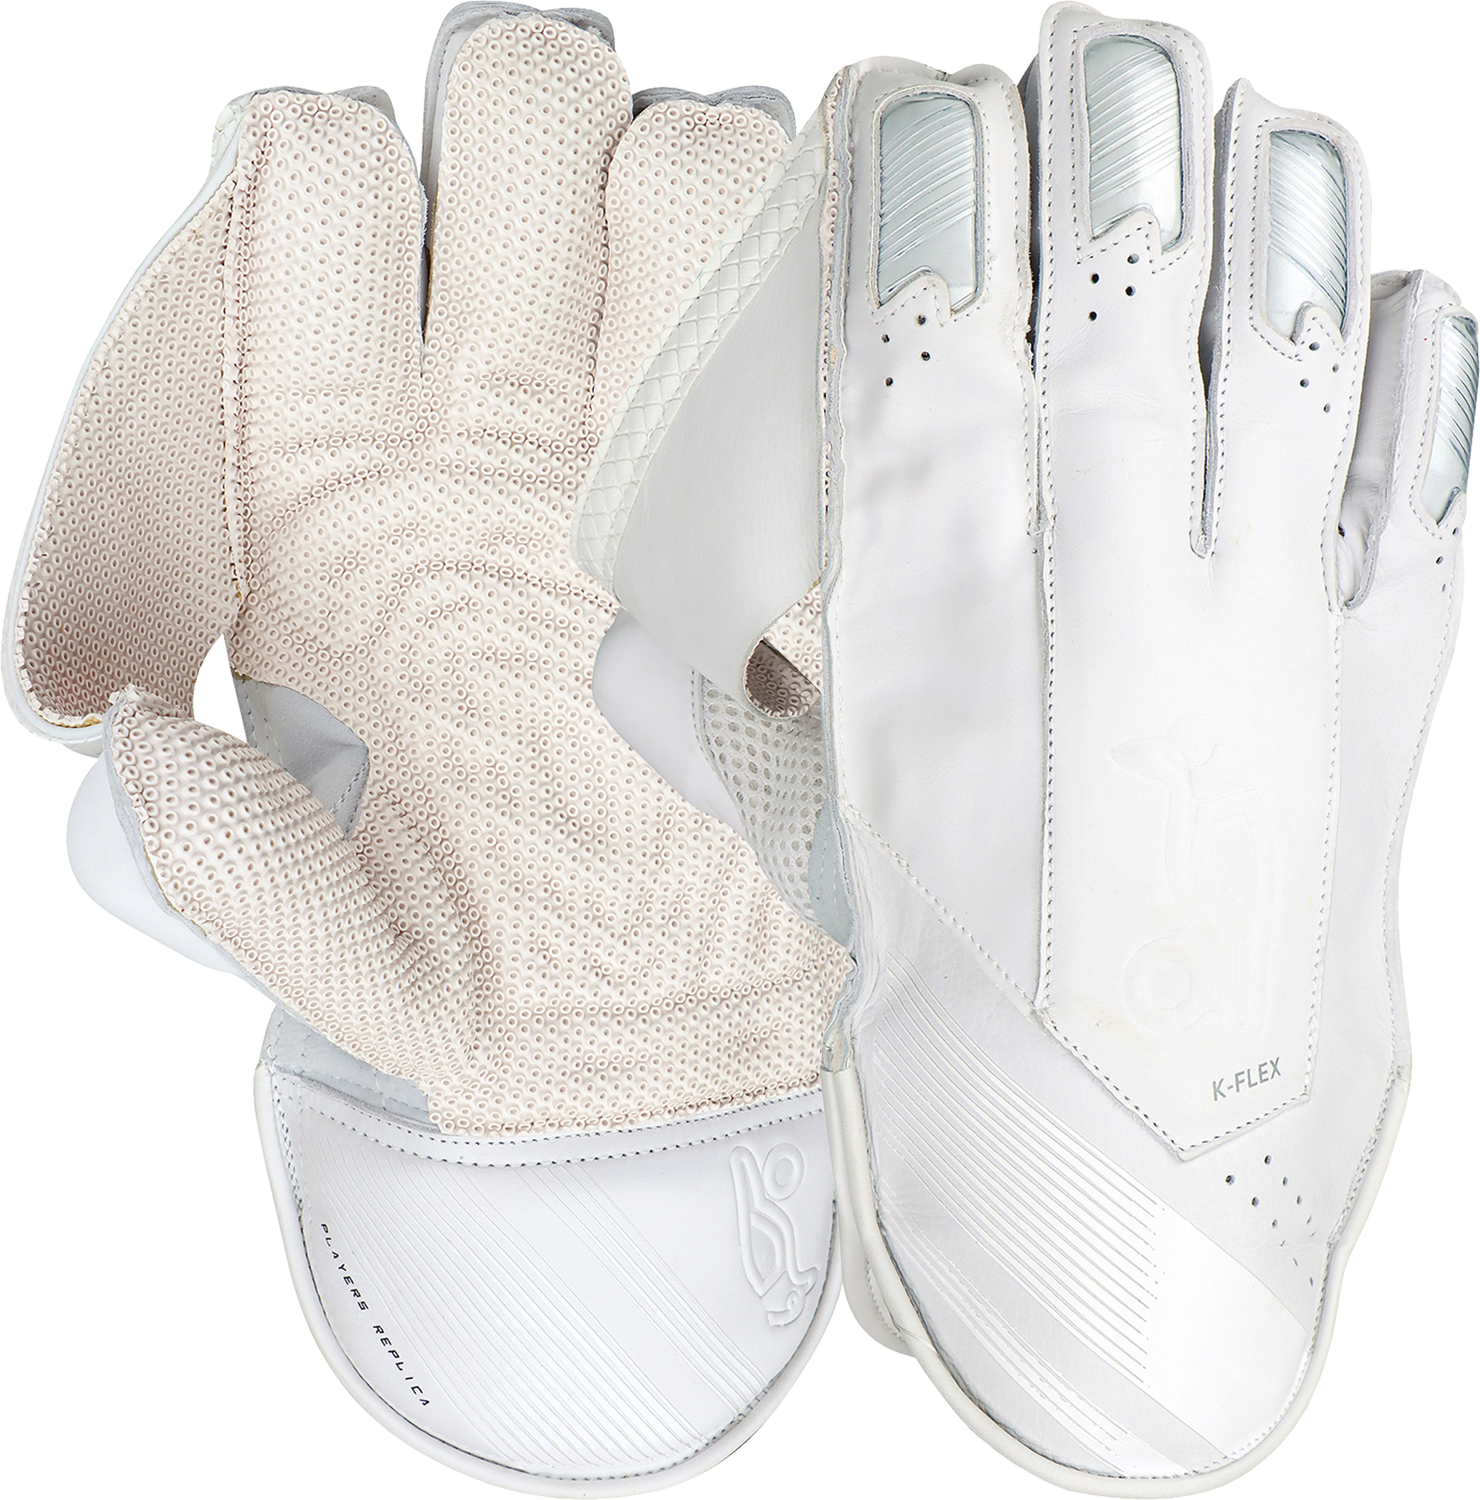 Kookaburra-Players-Replica-Wicket-Keeping-Glove